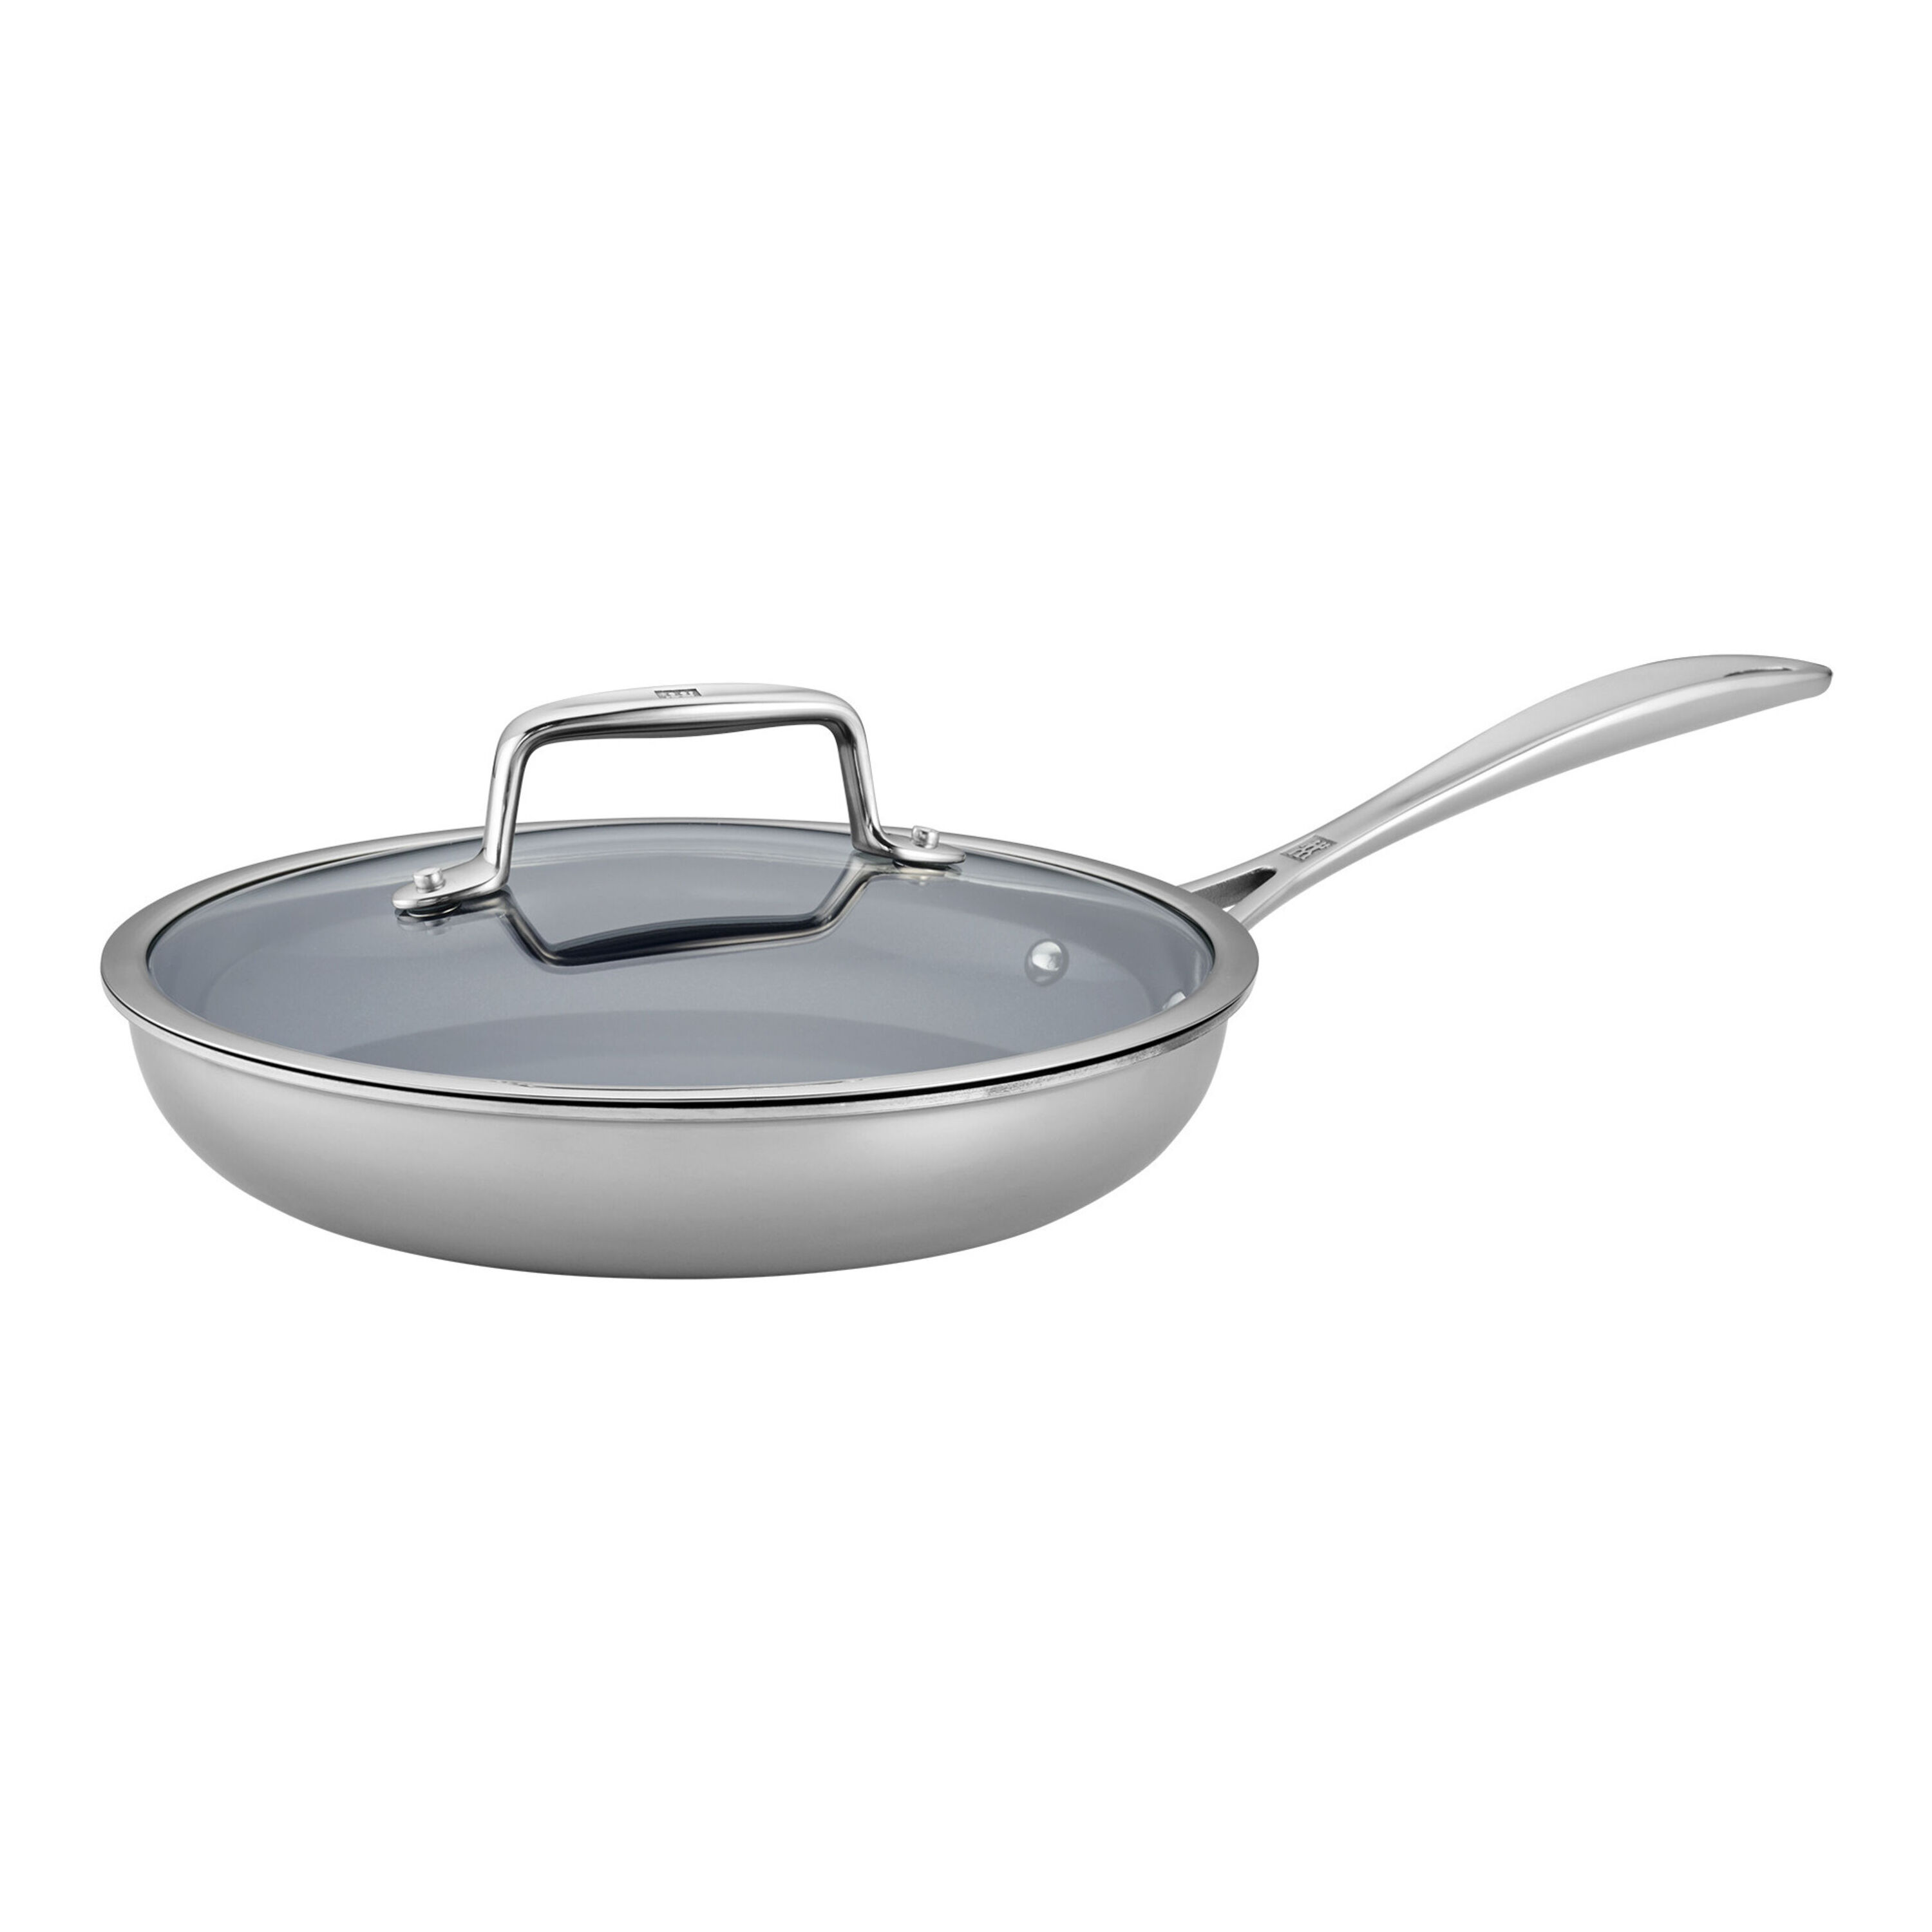 iron clad frying pan